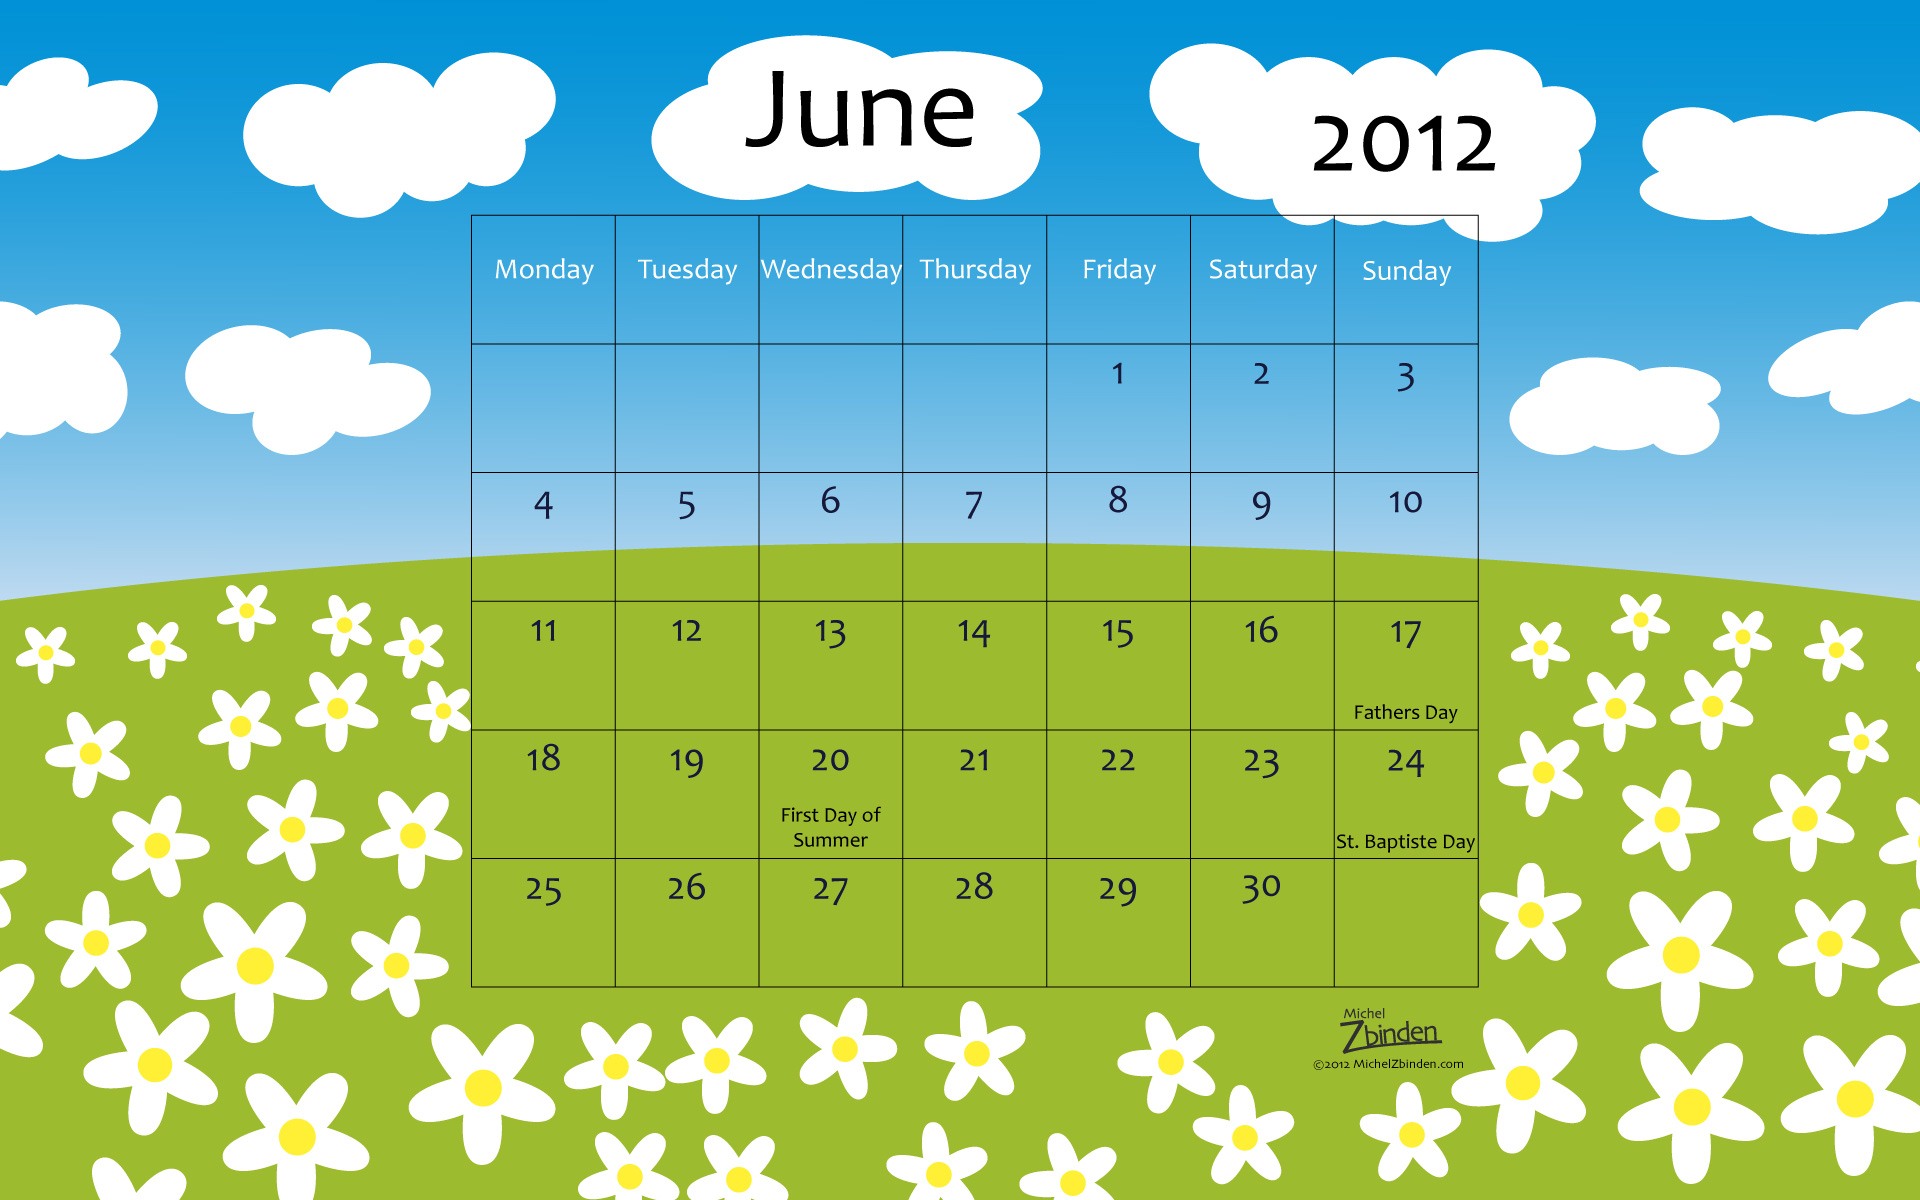 June 2012 Calendar wallpapers (1) #2 - 1920x1200